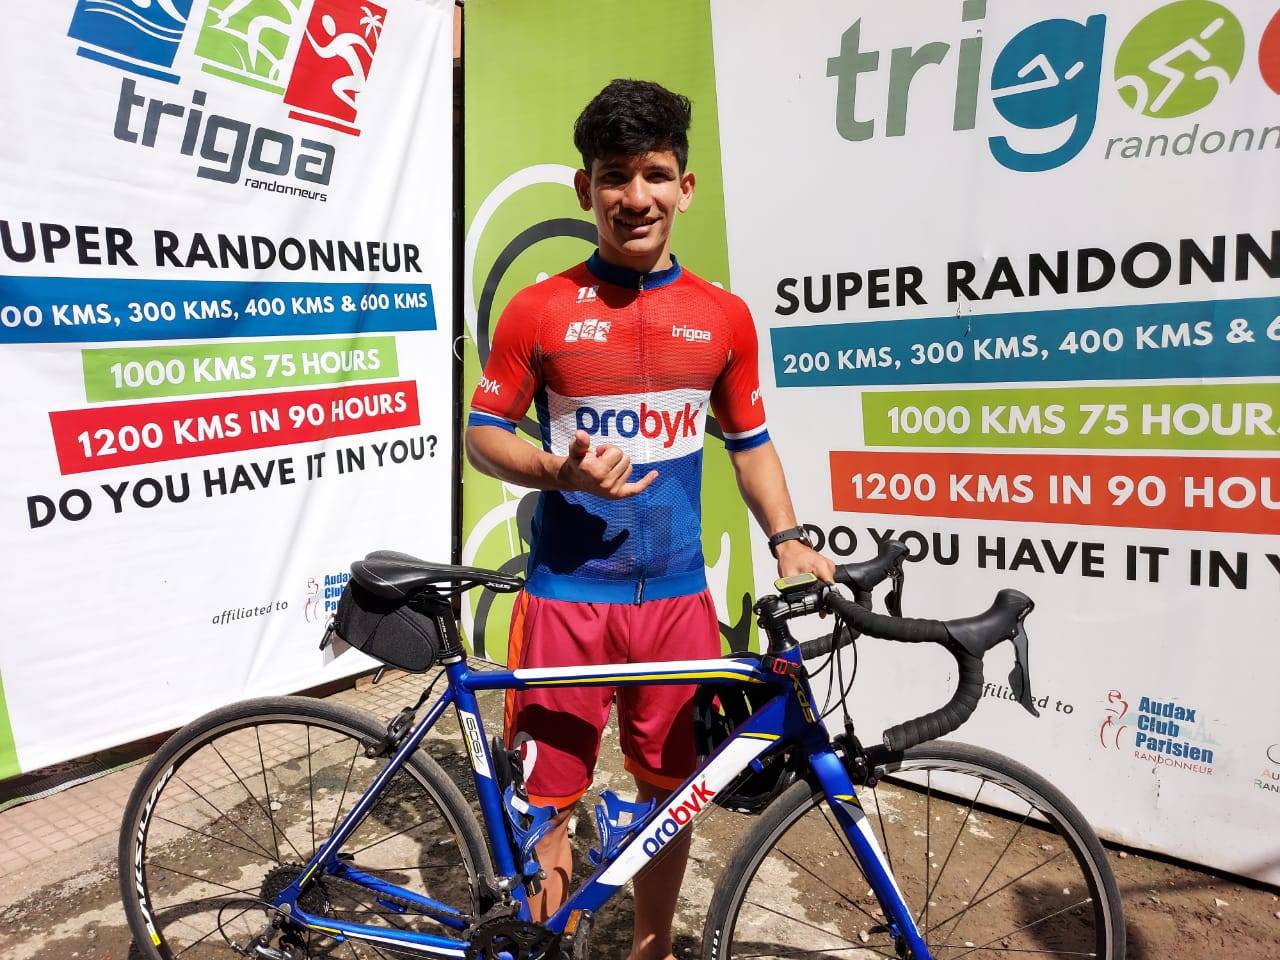 Prakash Khatri ( 26) completed Tri Goa's 150km cycle ride in 5 hours 47 mins.